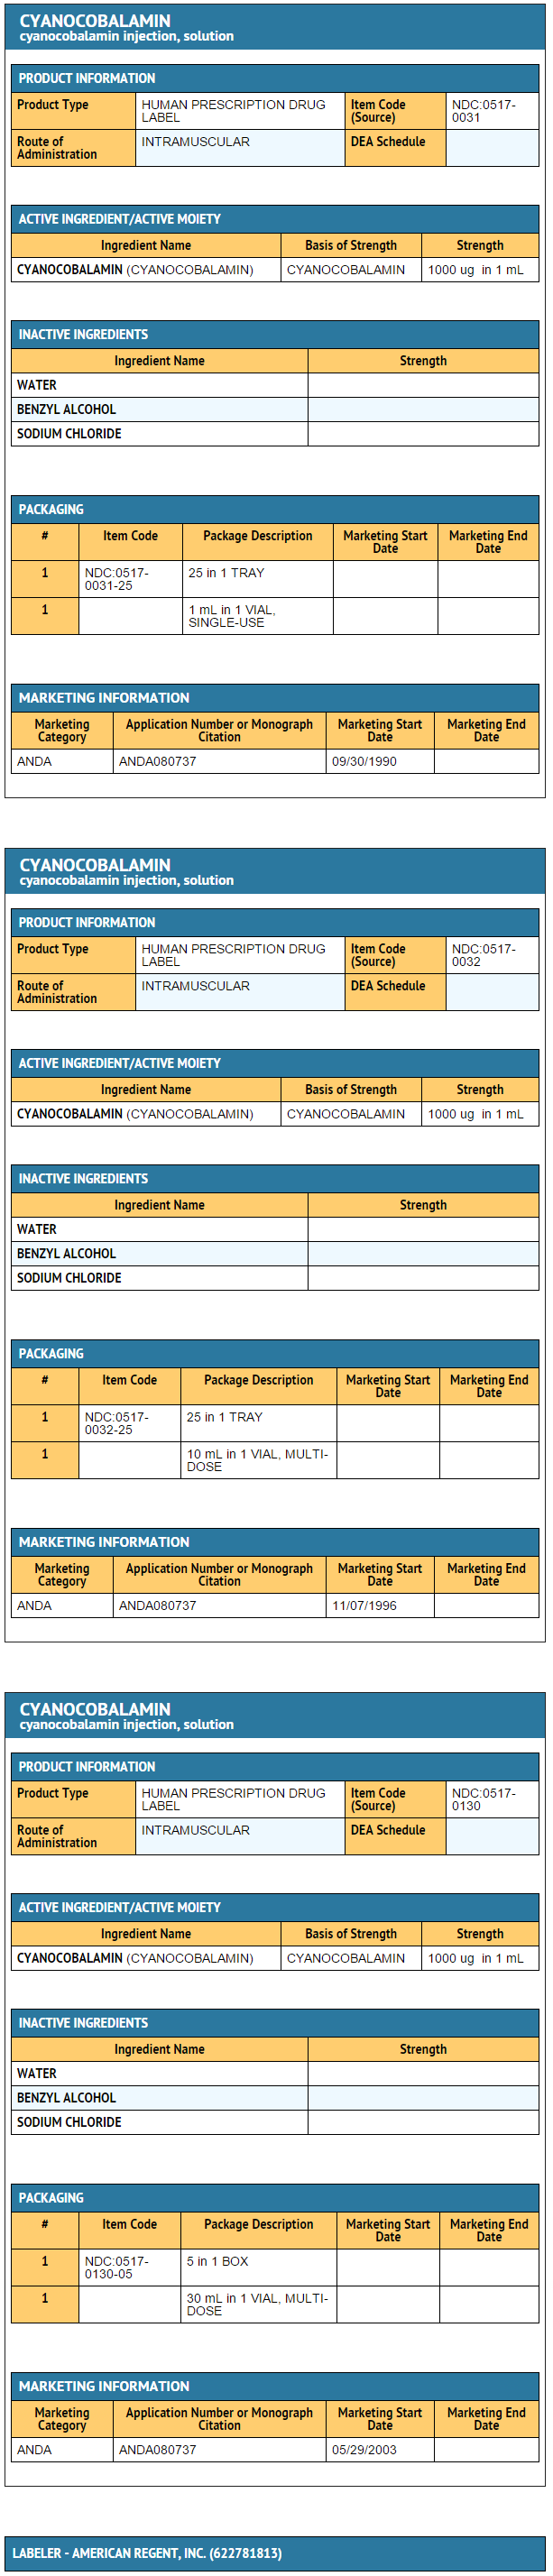 Cyanocobalamin FDA package label.png